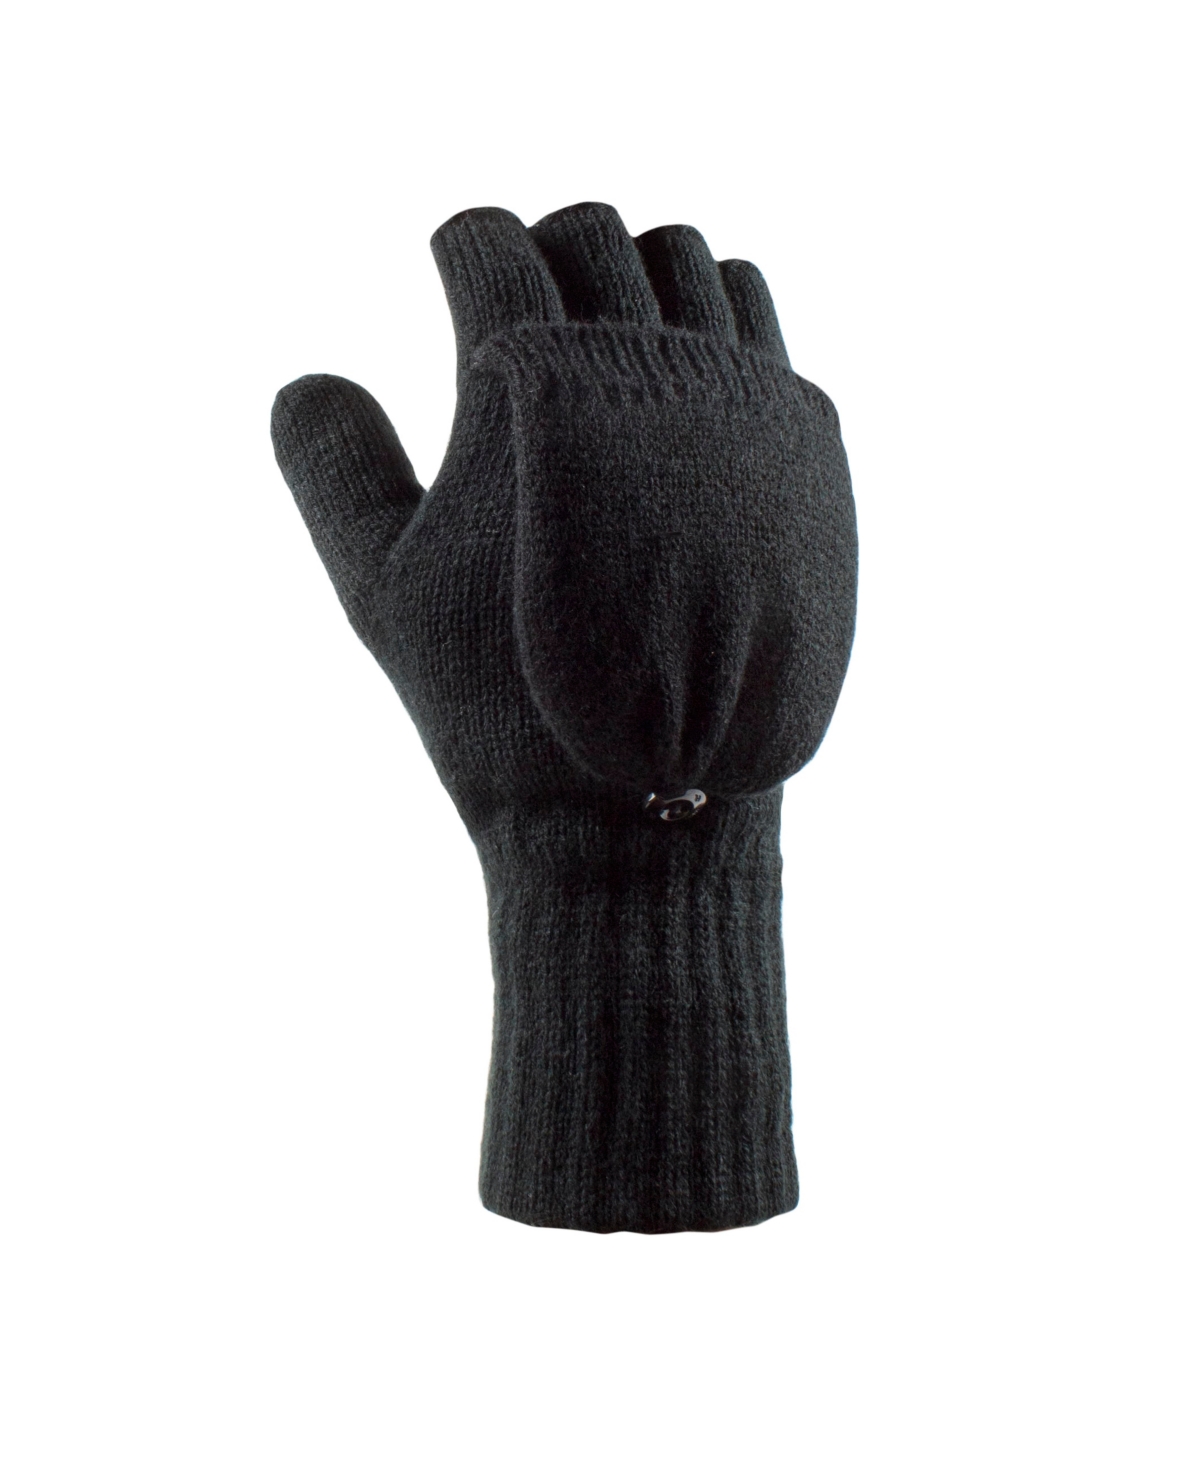 Men's Ken Converter Mitten Glove - Black